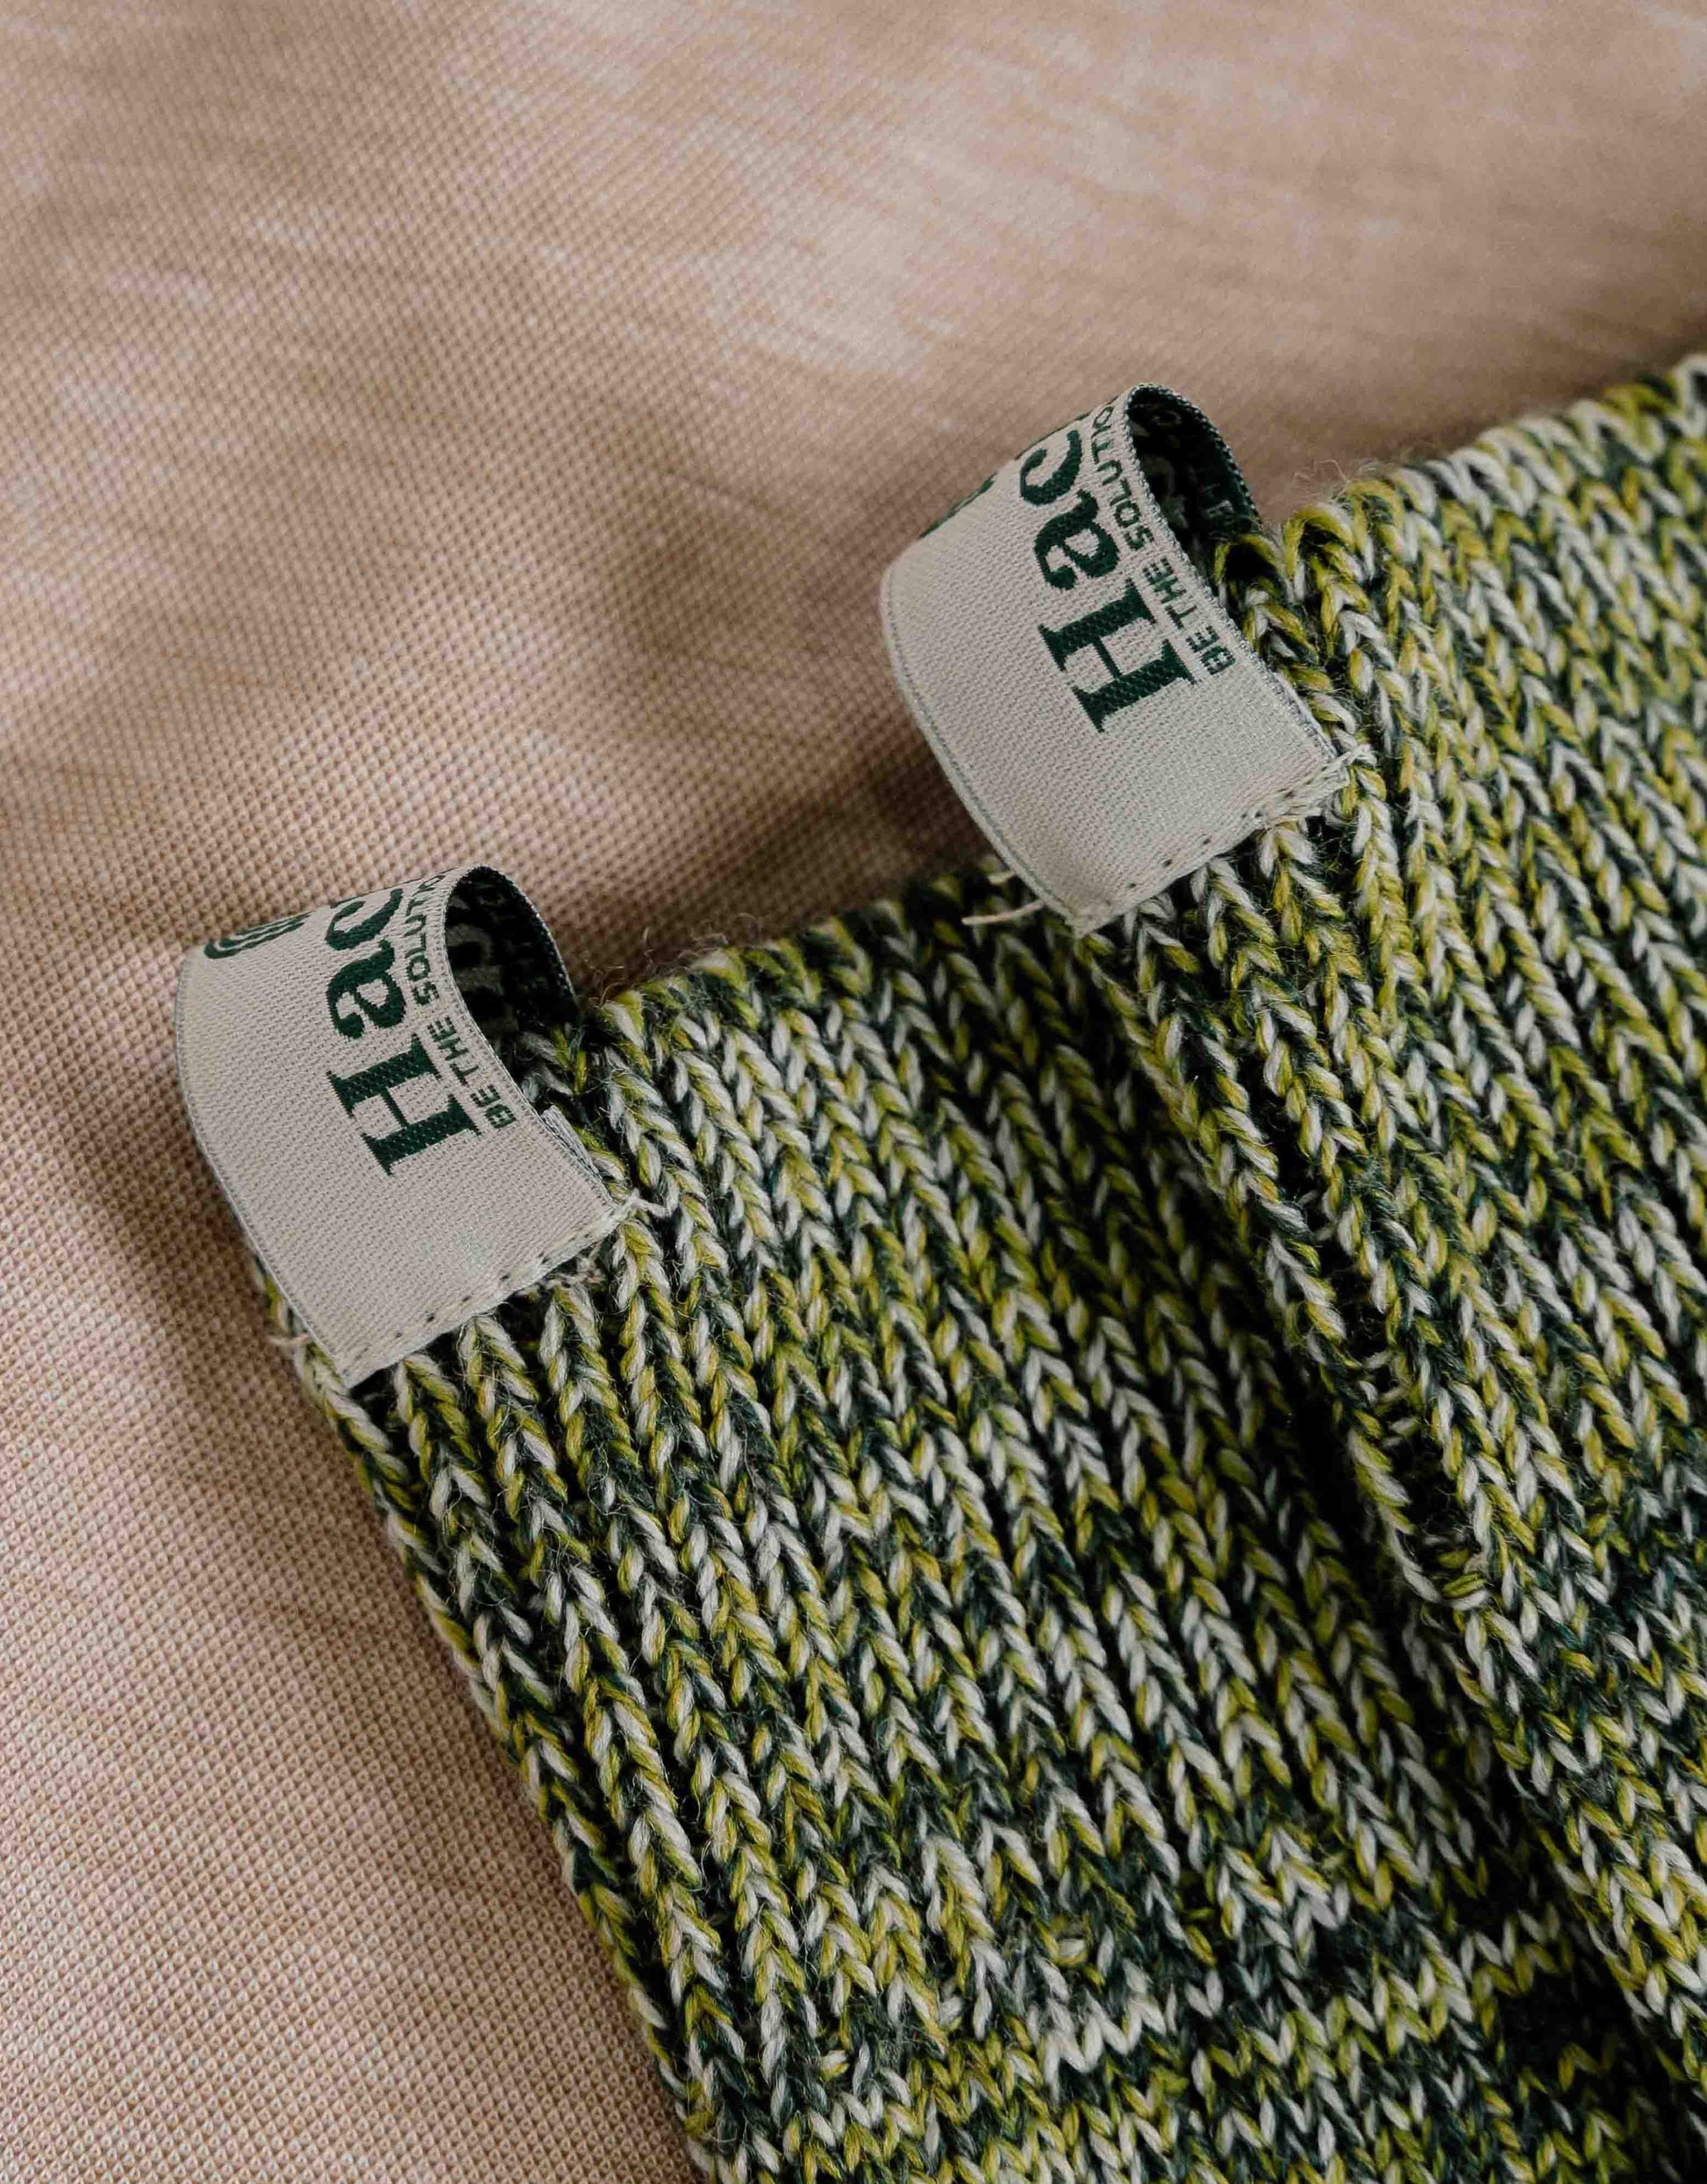 Hachure Wool Hike & Trek Socks in forest green colour